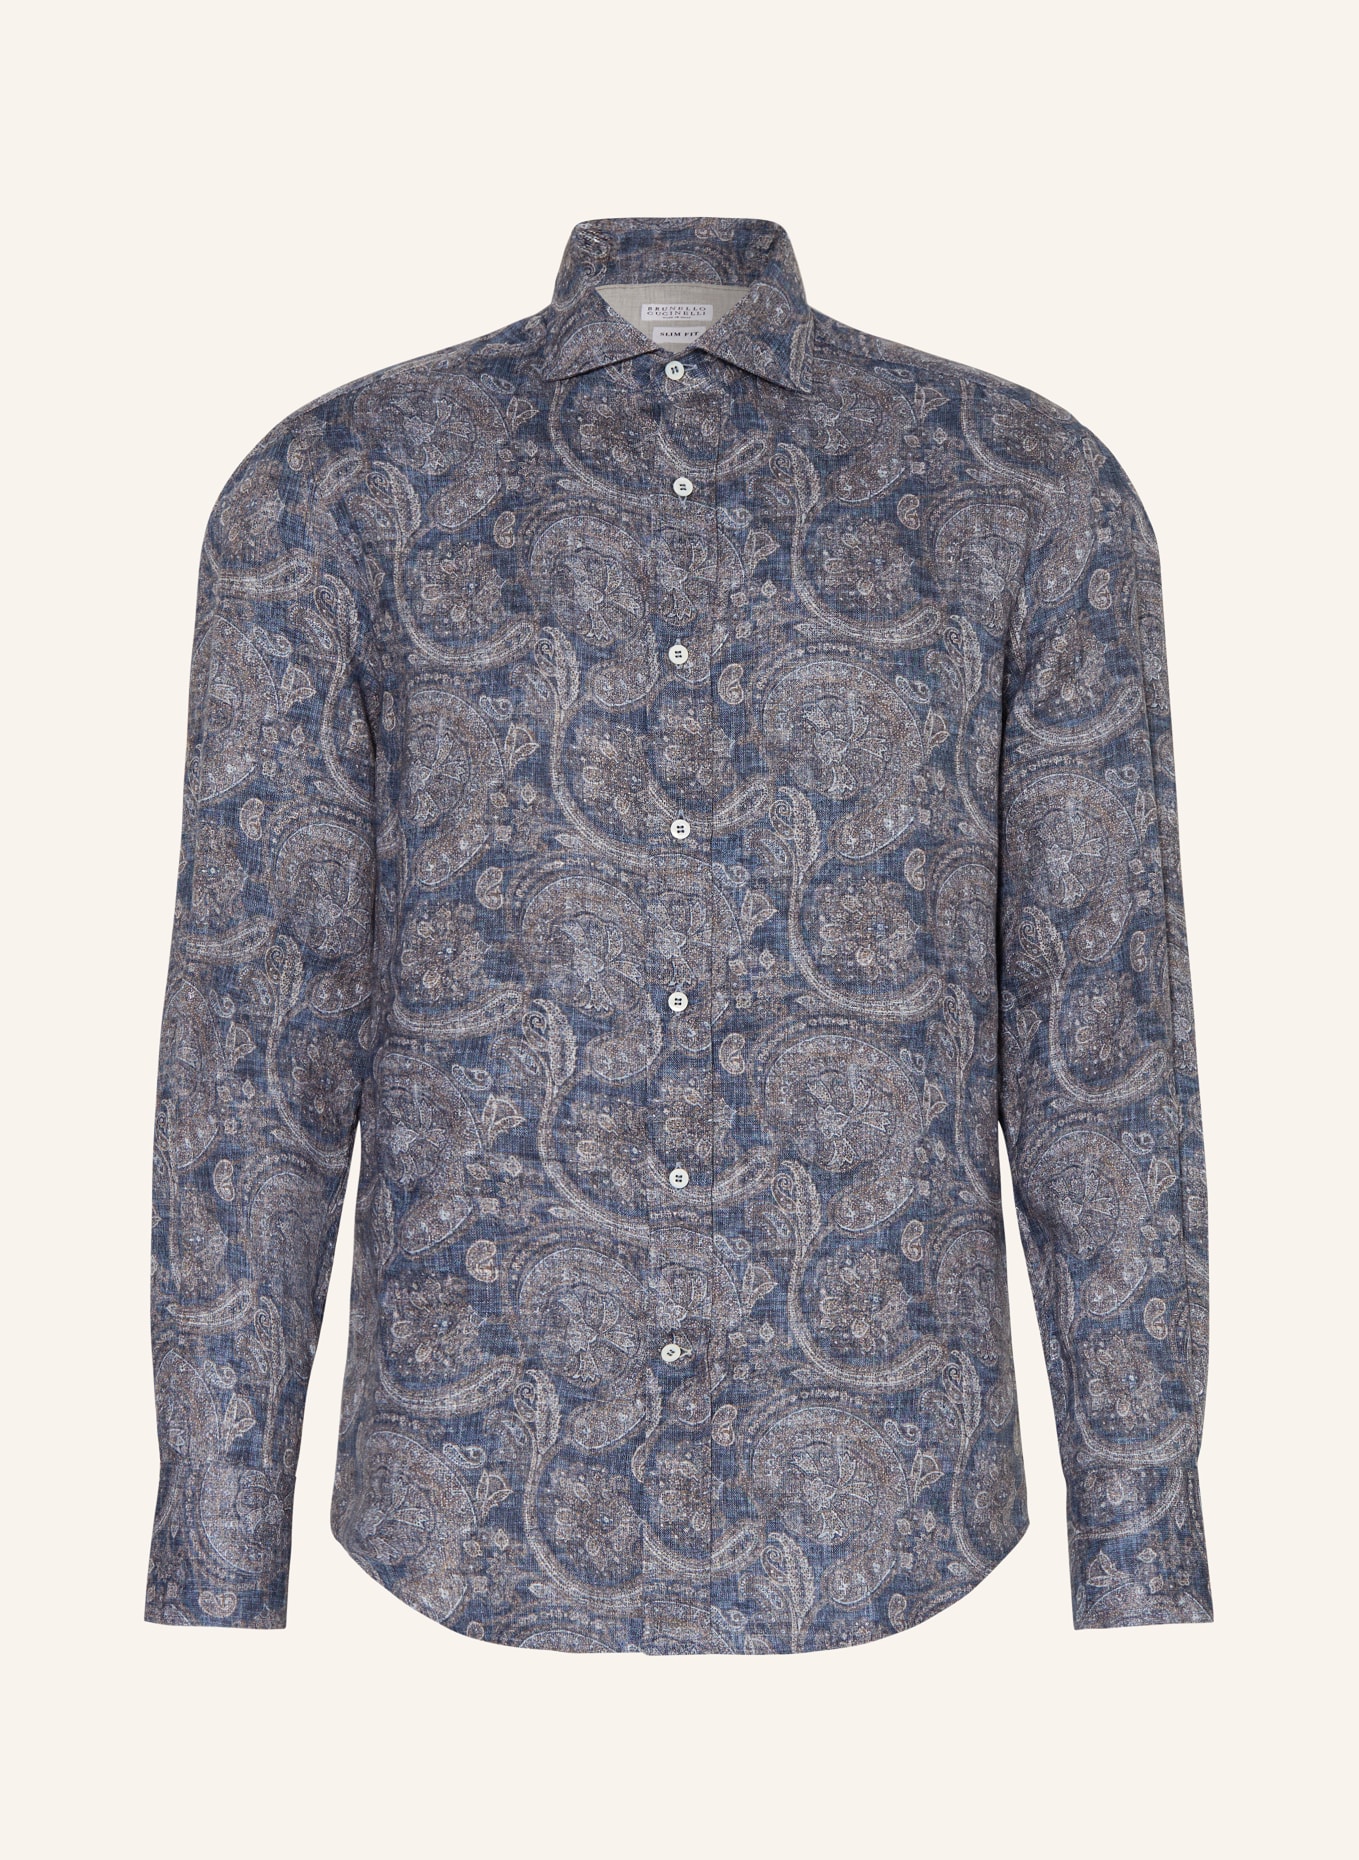 BRUNELLO CUCINELLI Leinenhemd Slim Fit, Farbe: BLAUGRAU (Bild 1)